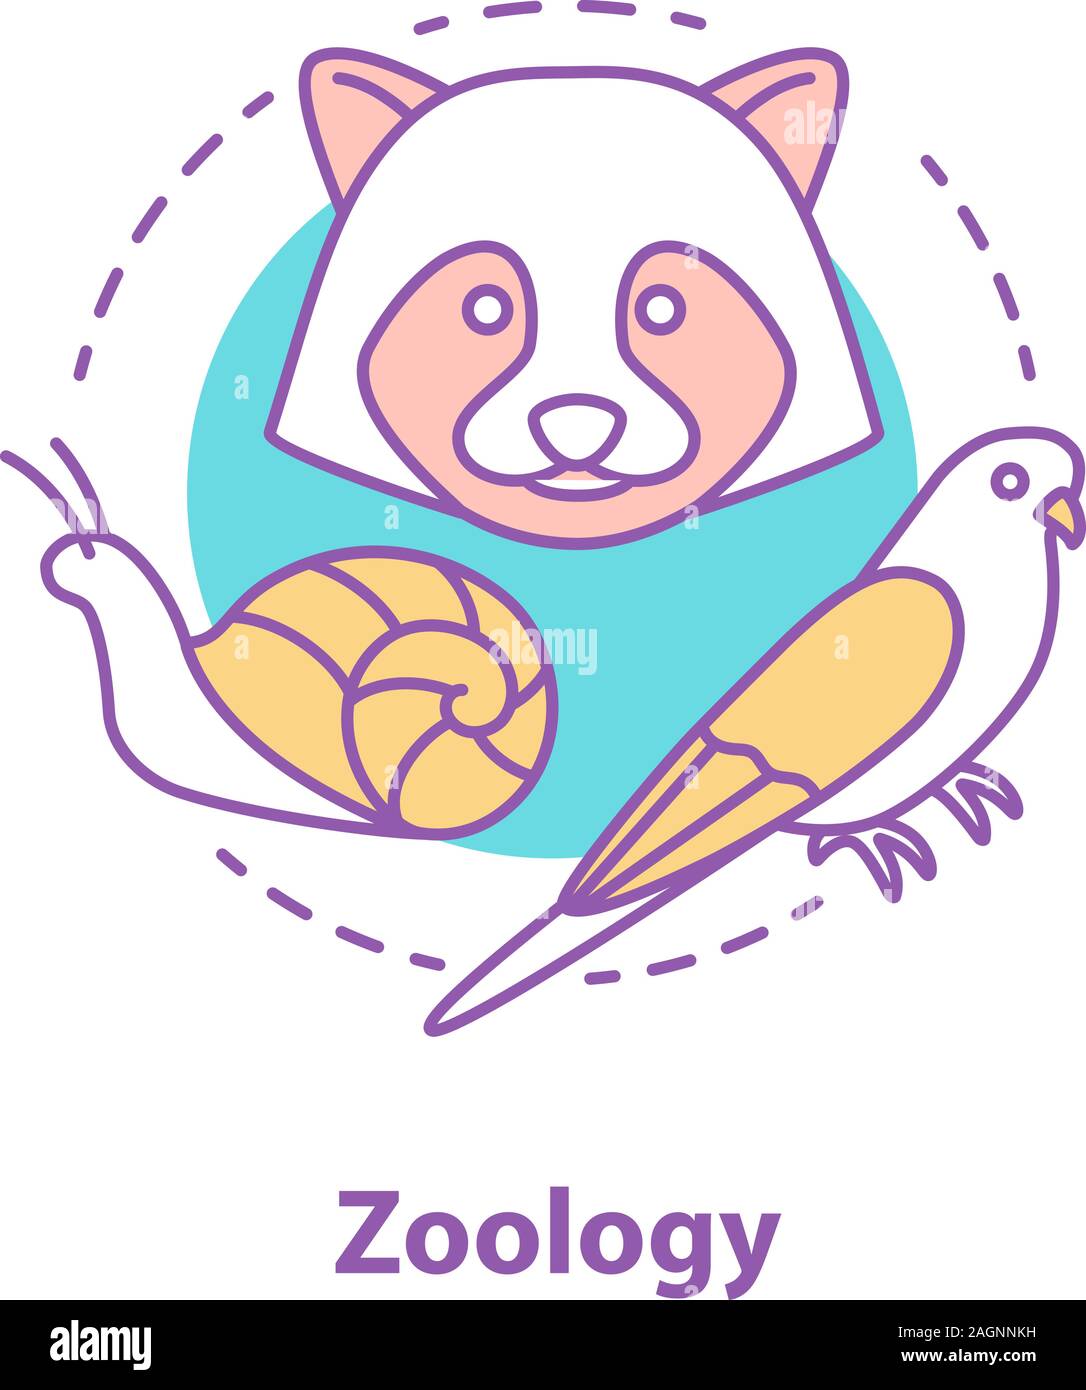 Zoology concept icon. Science idea thin line illustration. Animal